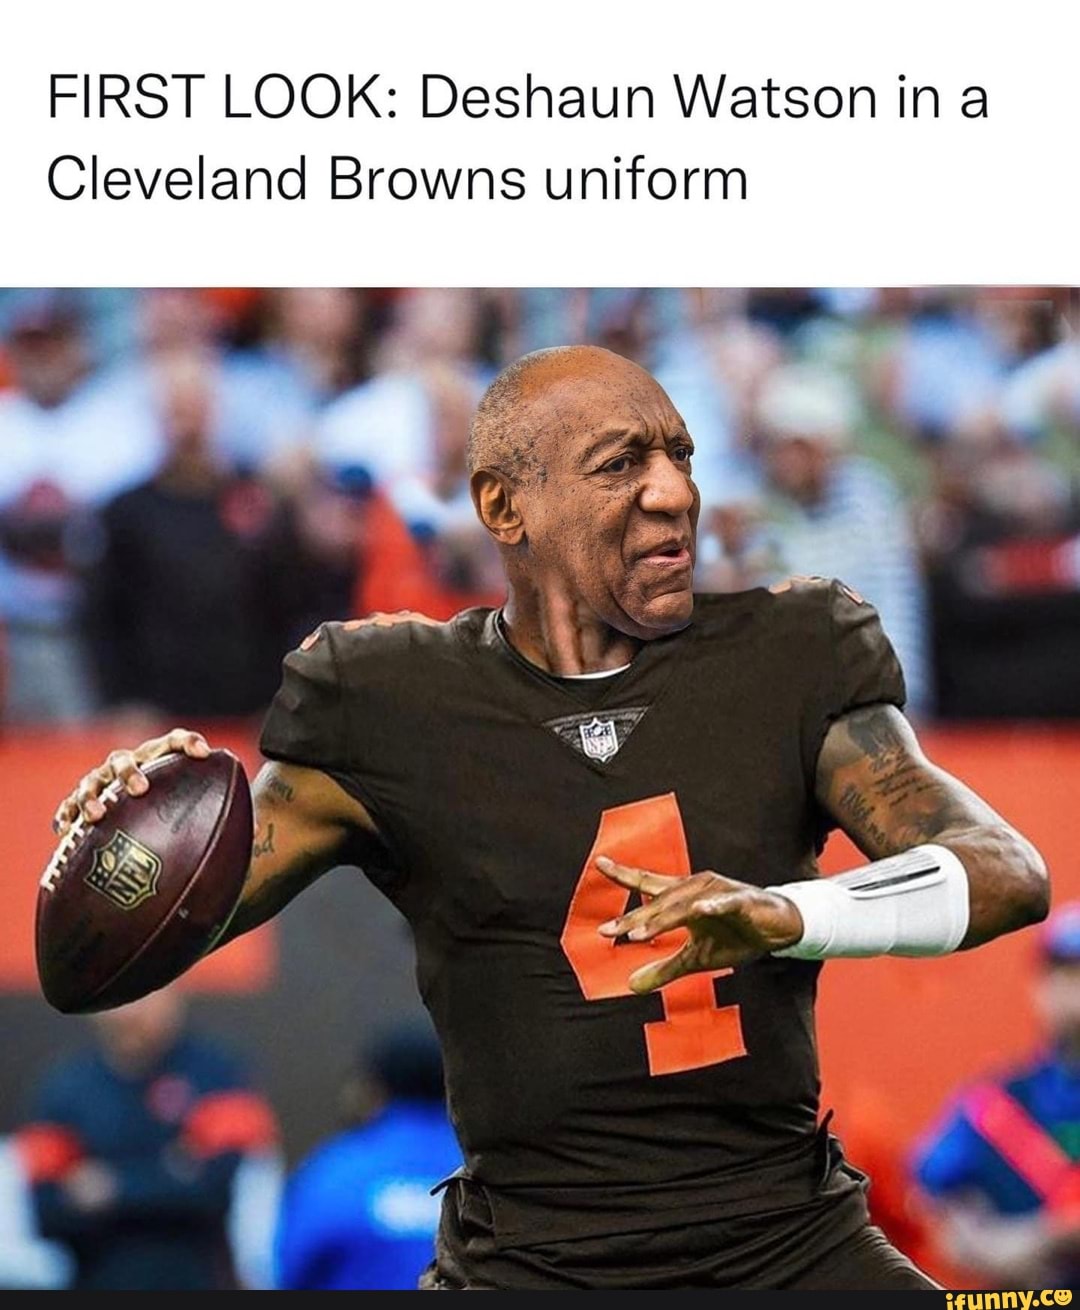 FIRST LOOK Deshaun Watson ina Cleveland Browns uniform iFunny